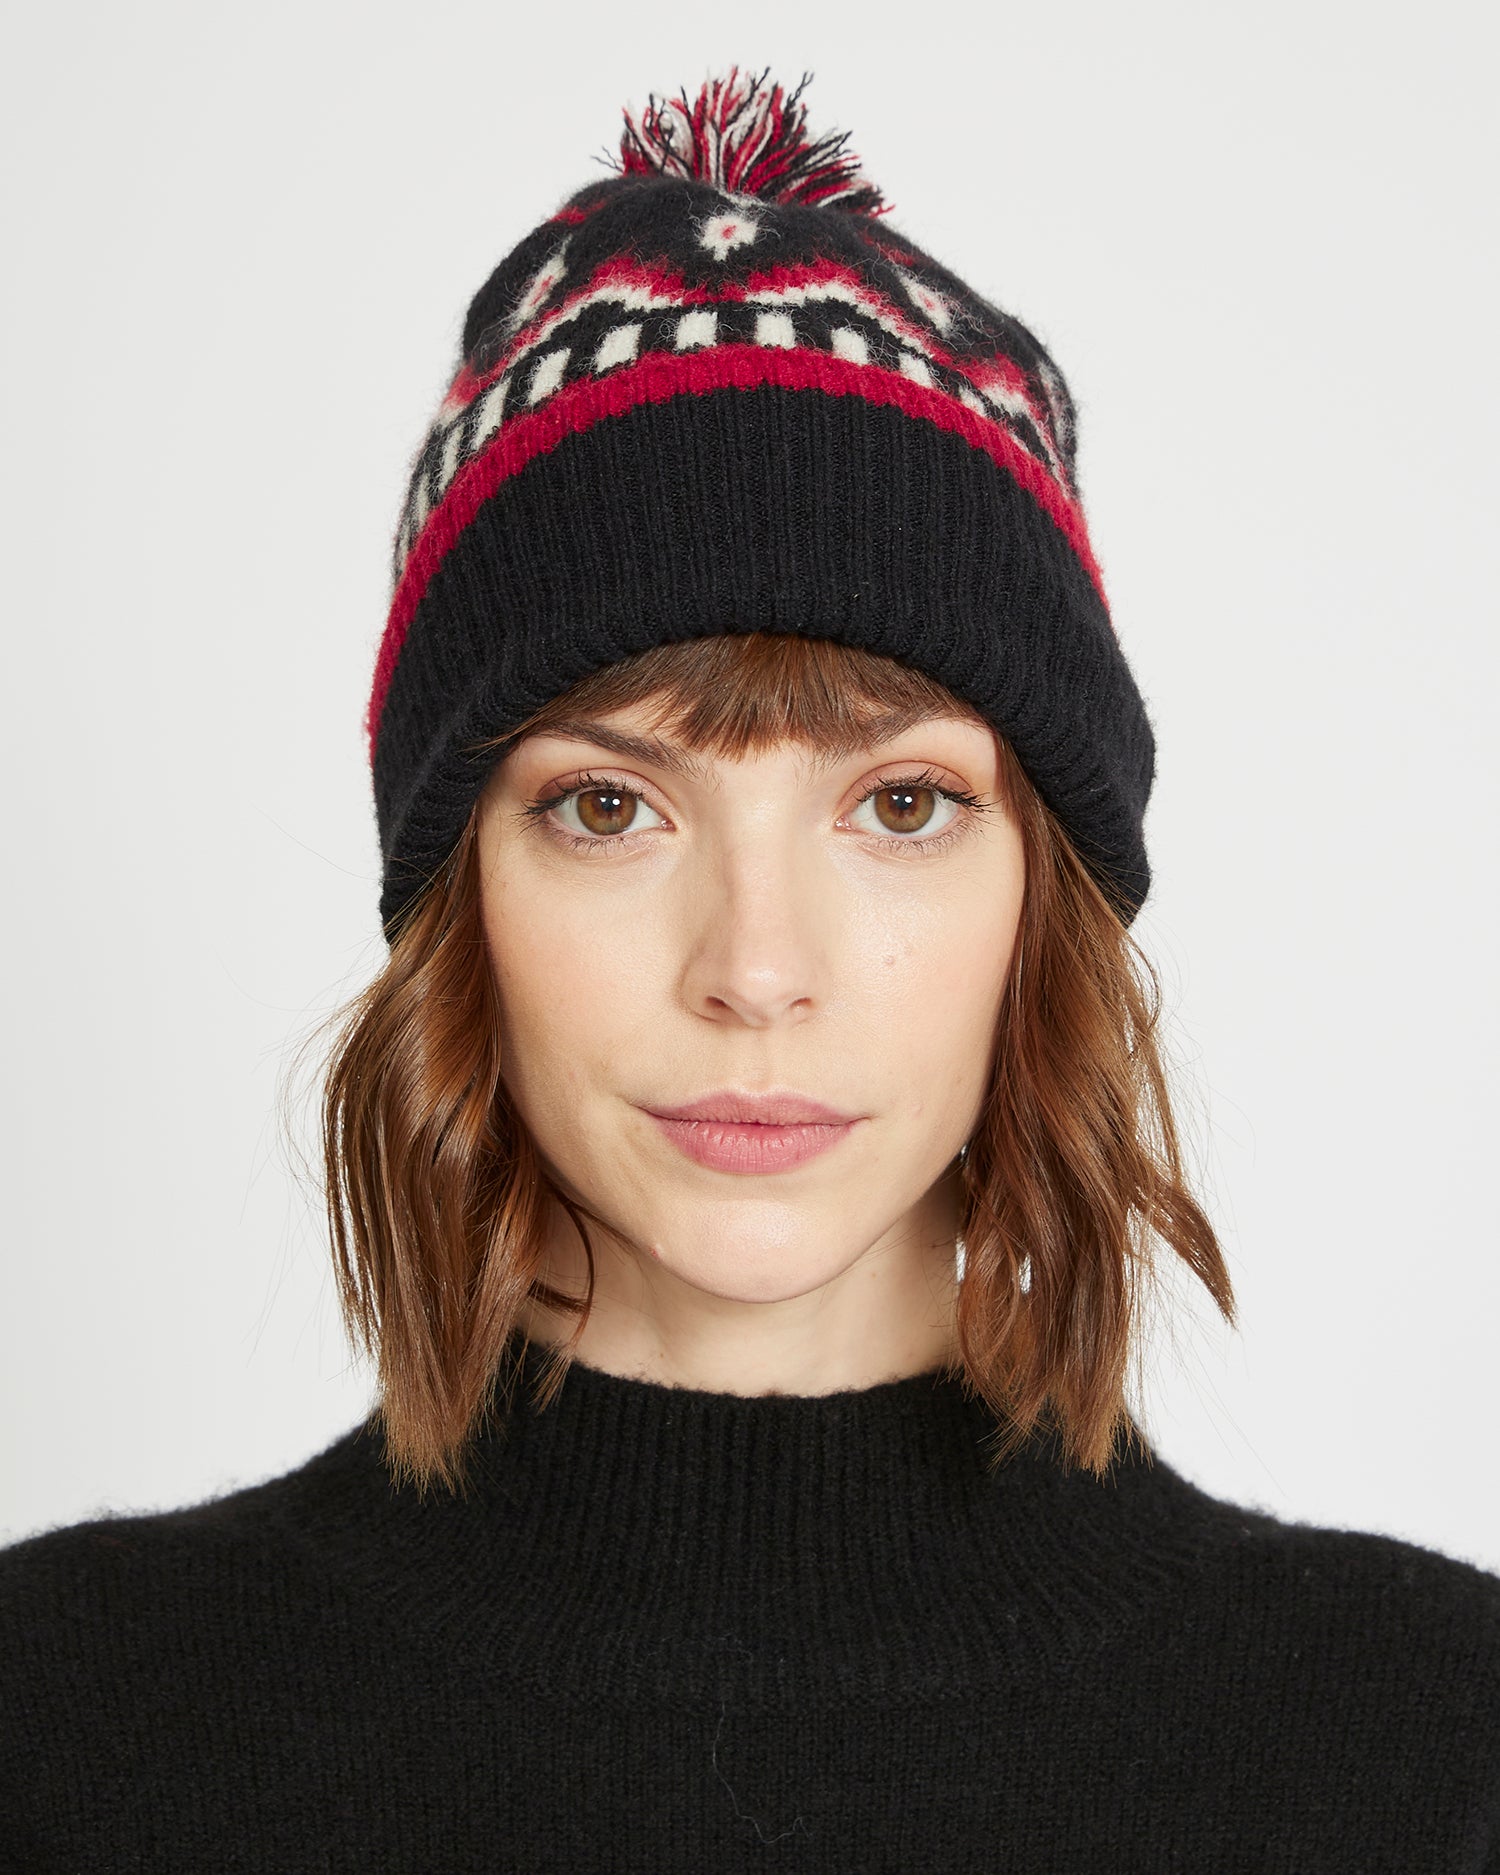 Knitted cap with pom-pom